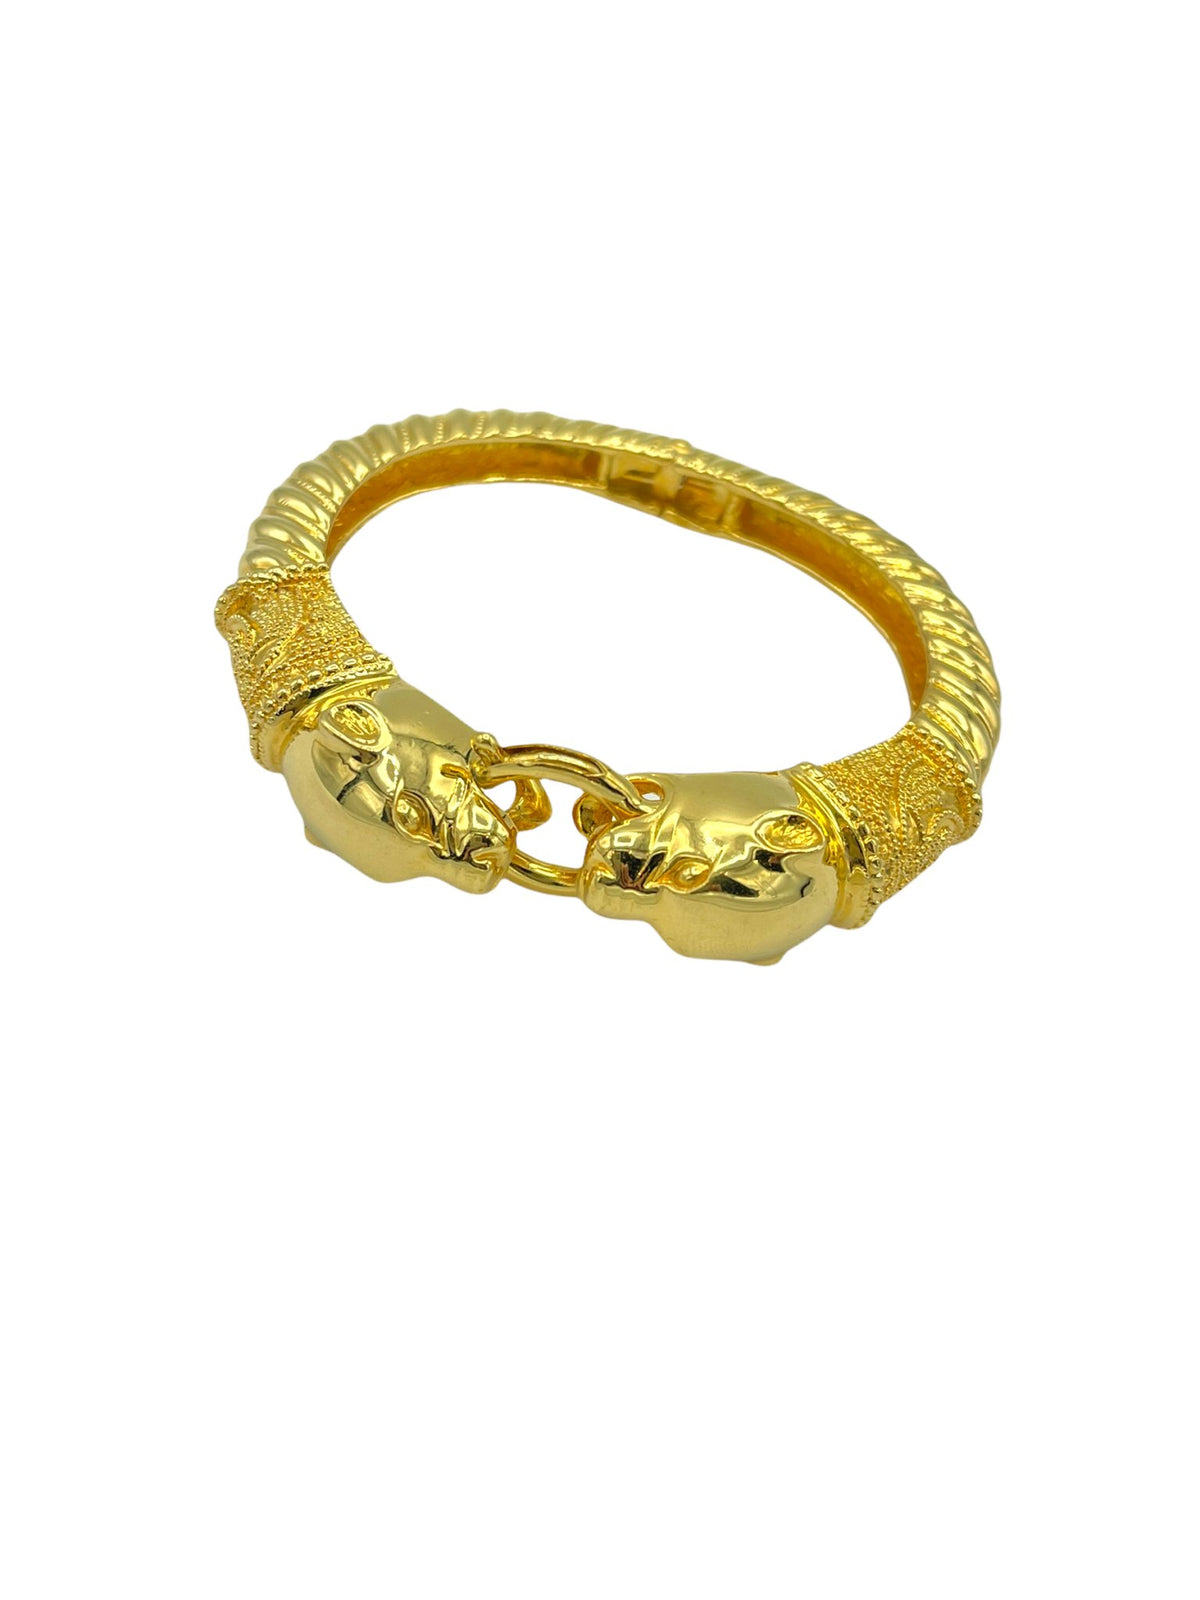 Joan Rivers Gold Panther Vintage Hinged Bangle Bracelet - 24 Wishes Vintage Jewelry